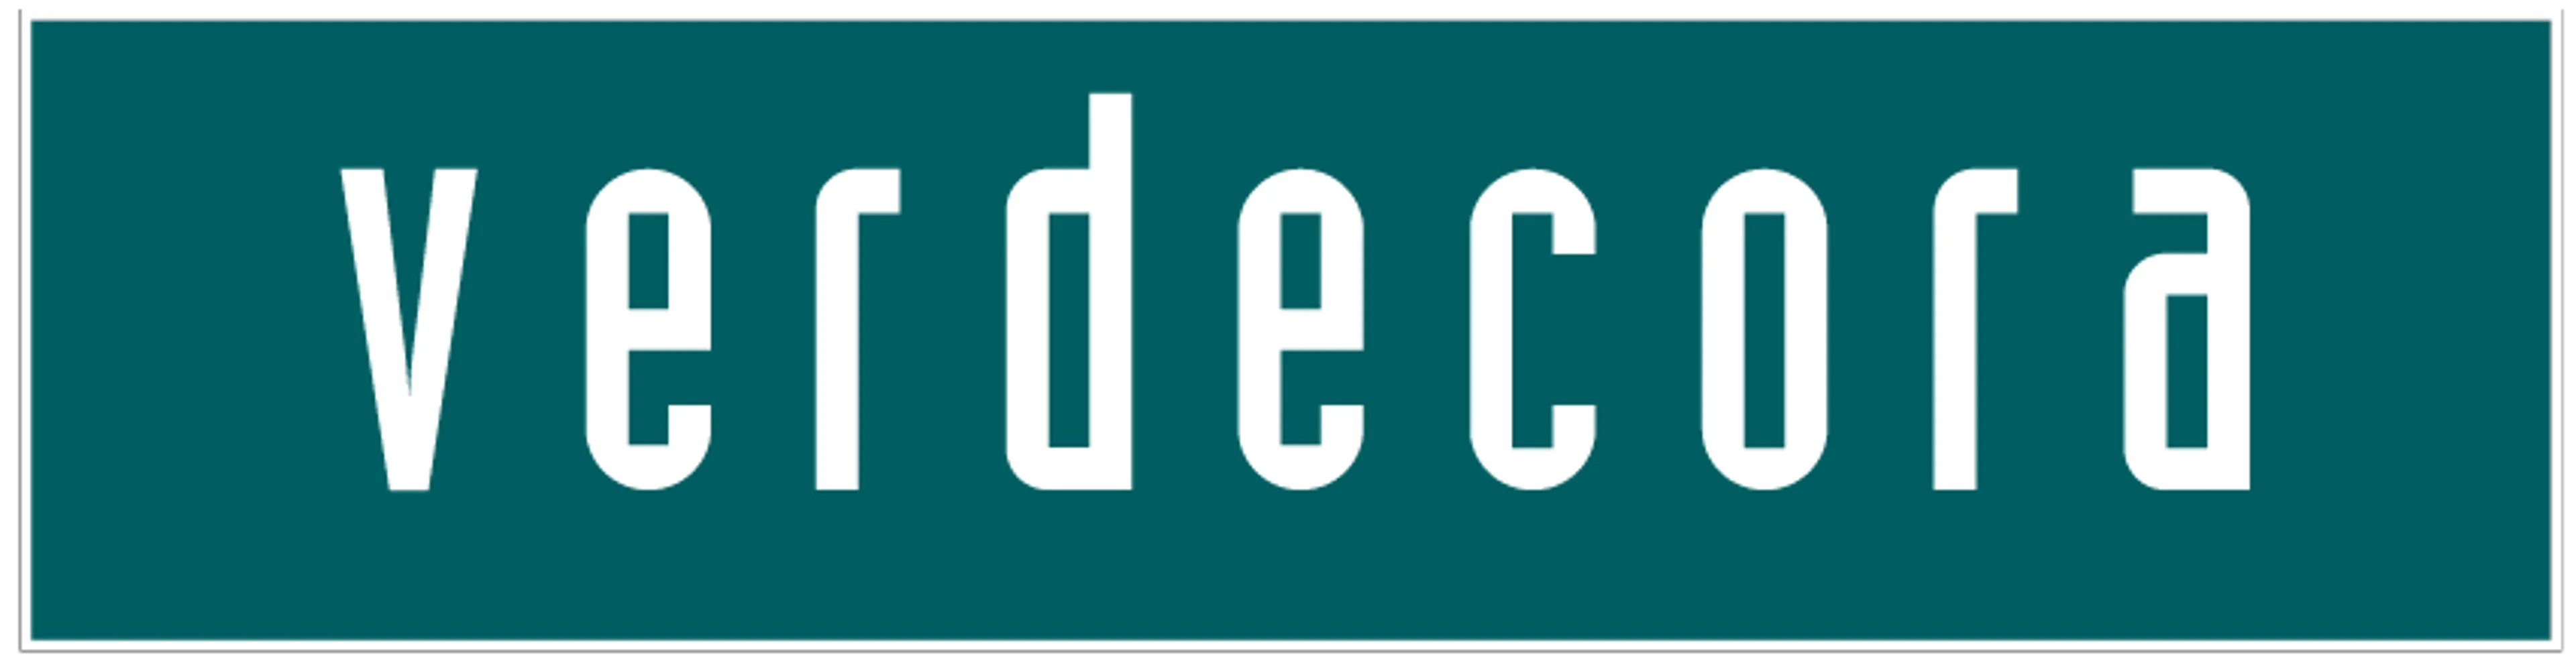 VERDECORA logo